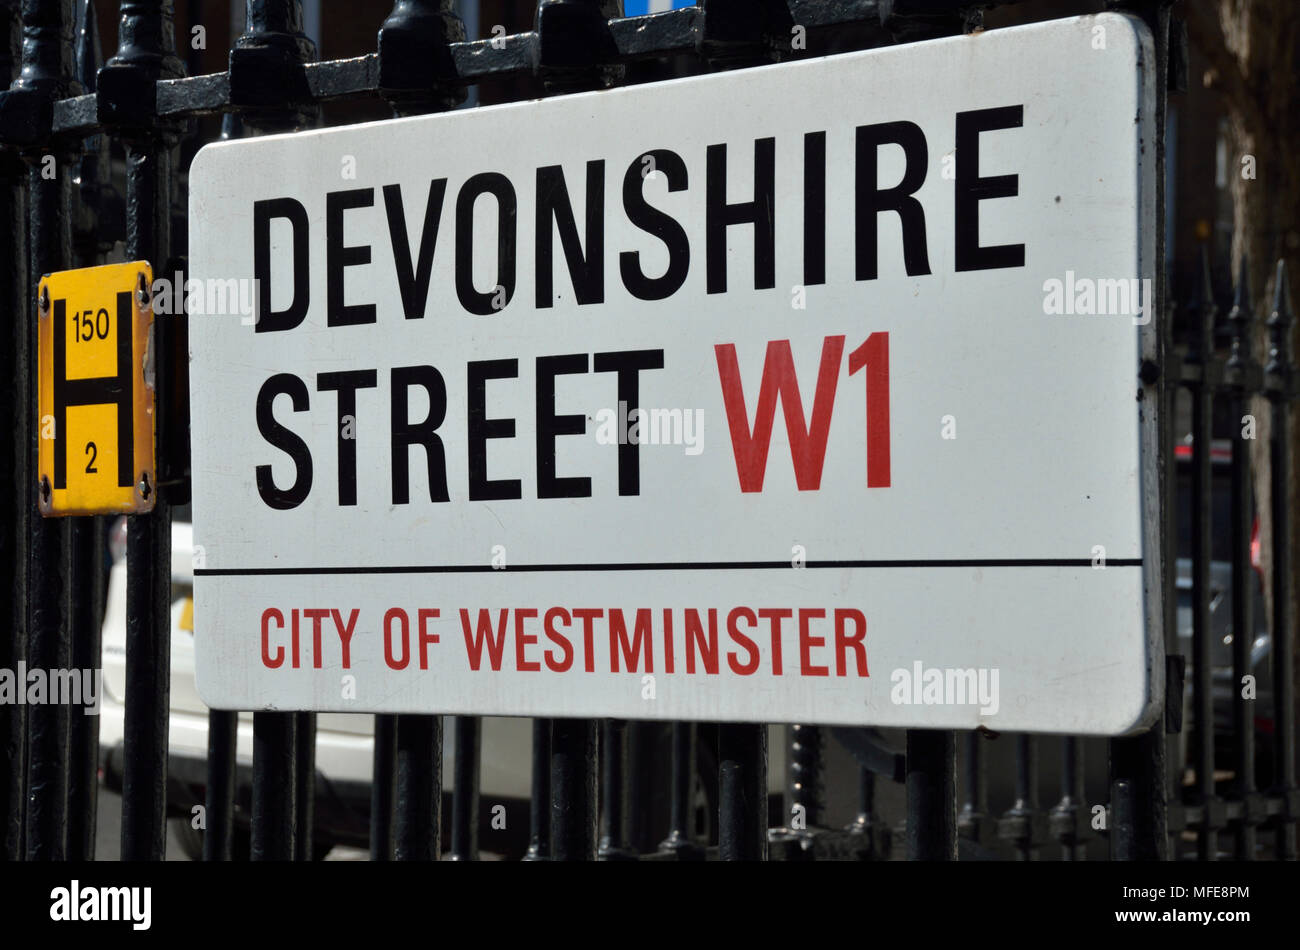 Devonshire Street W1 street sign, Marylebone, London, UK. Stock Photo